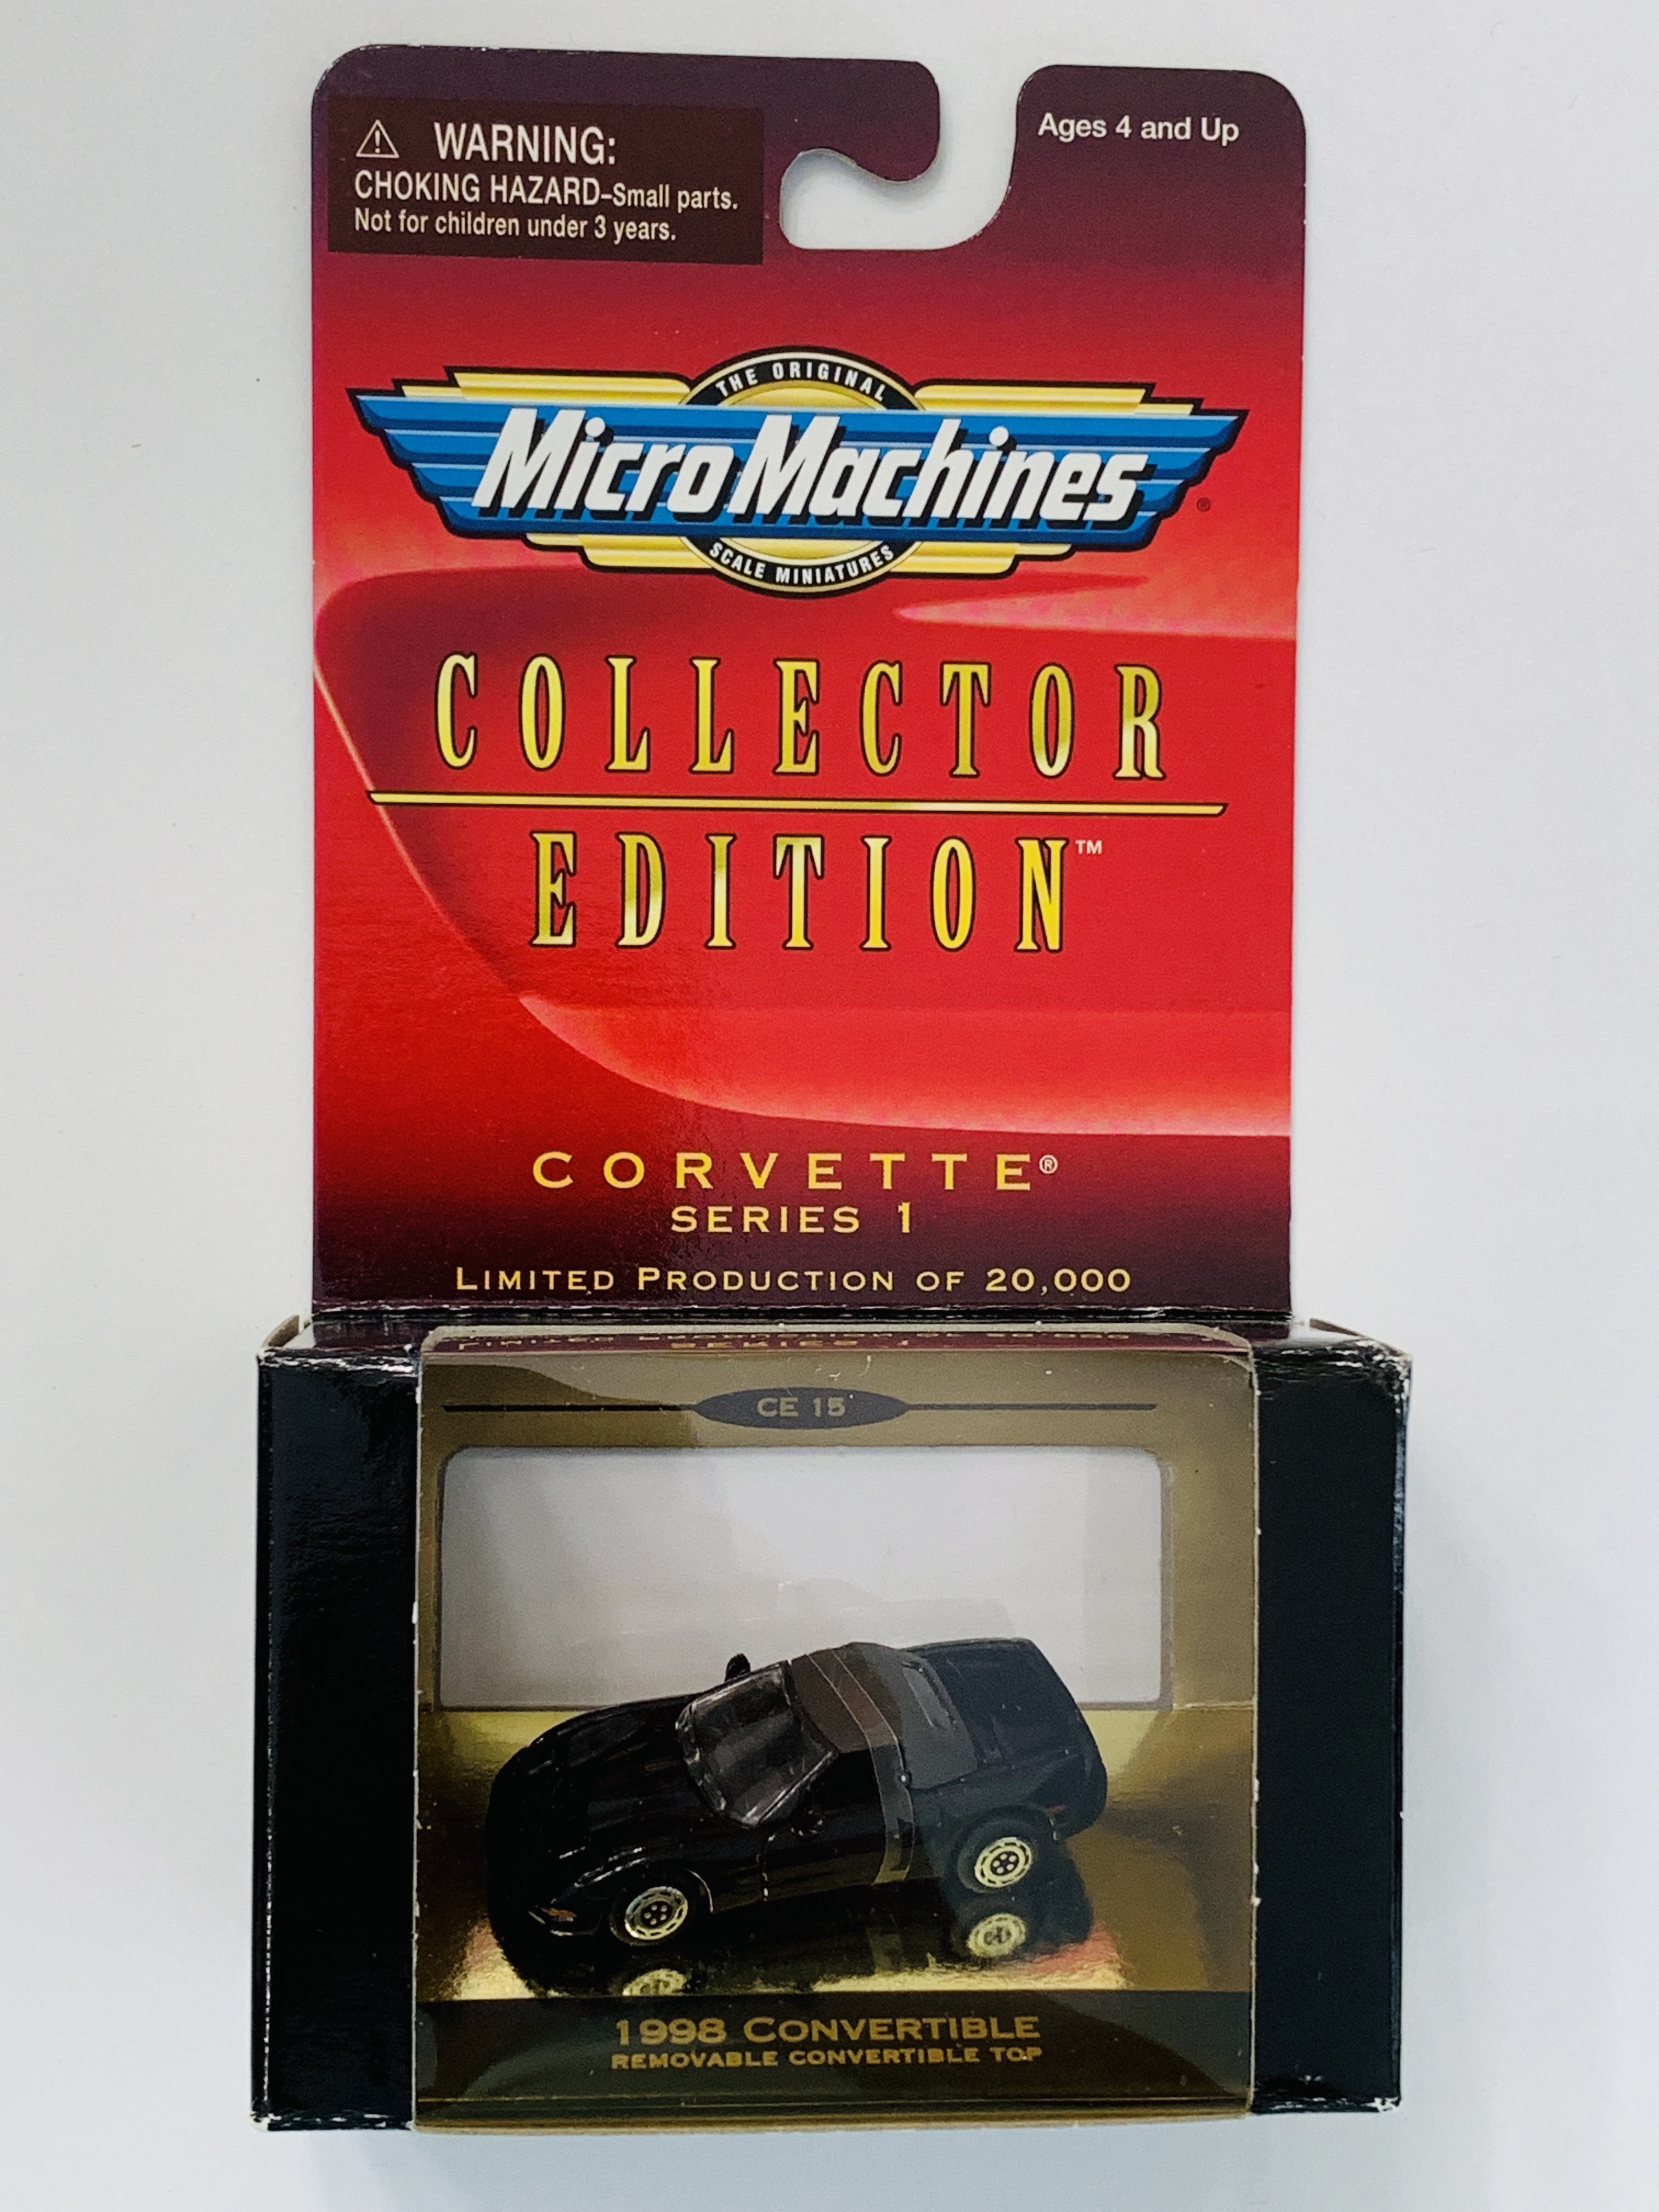 Micro Machines Collector Edition Corvette Series 1 1998 Convertible